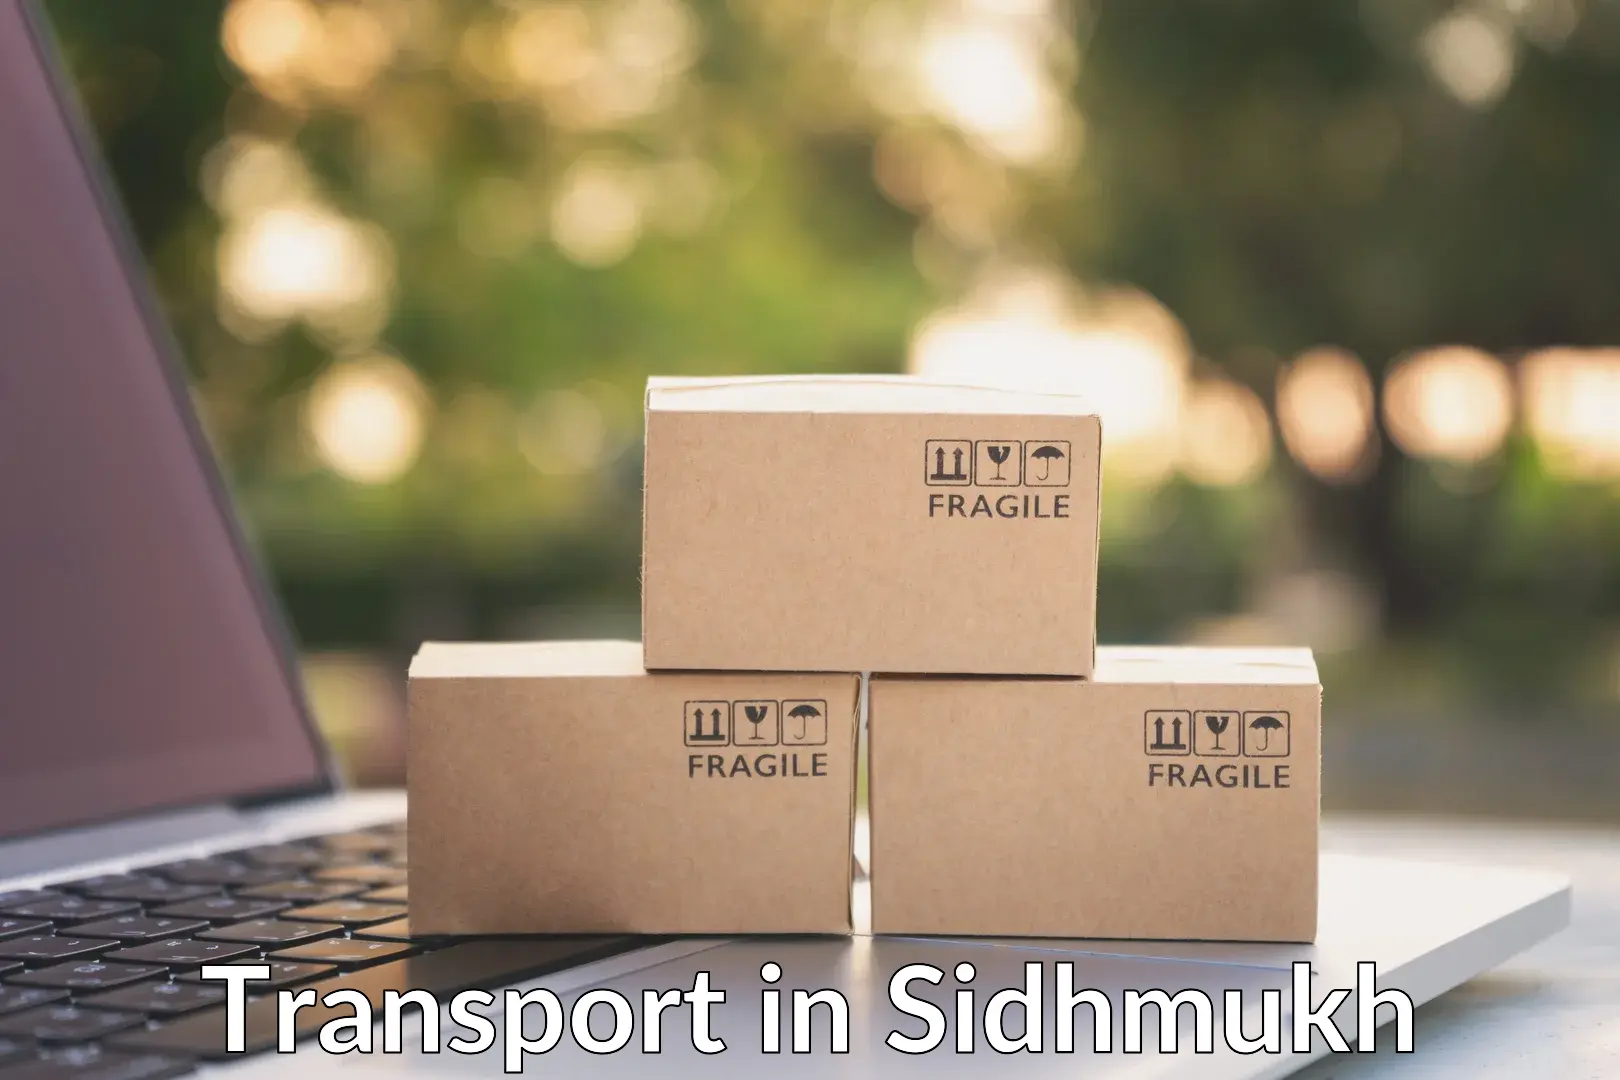 Nearest transport service in Sidhmukh